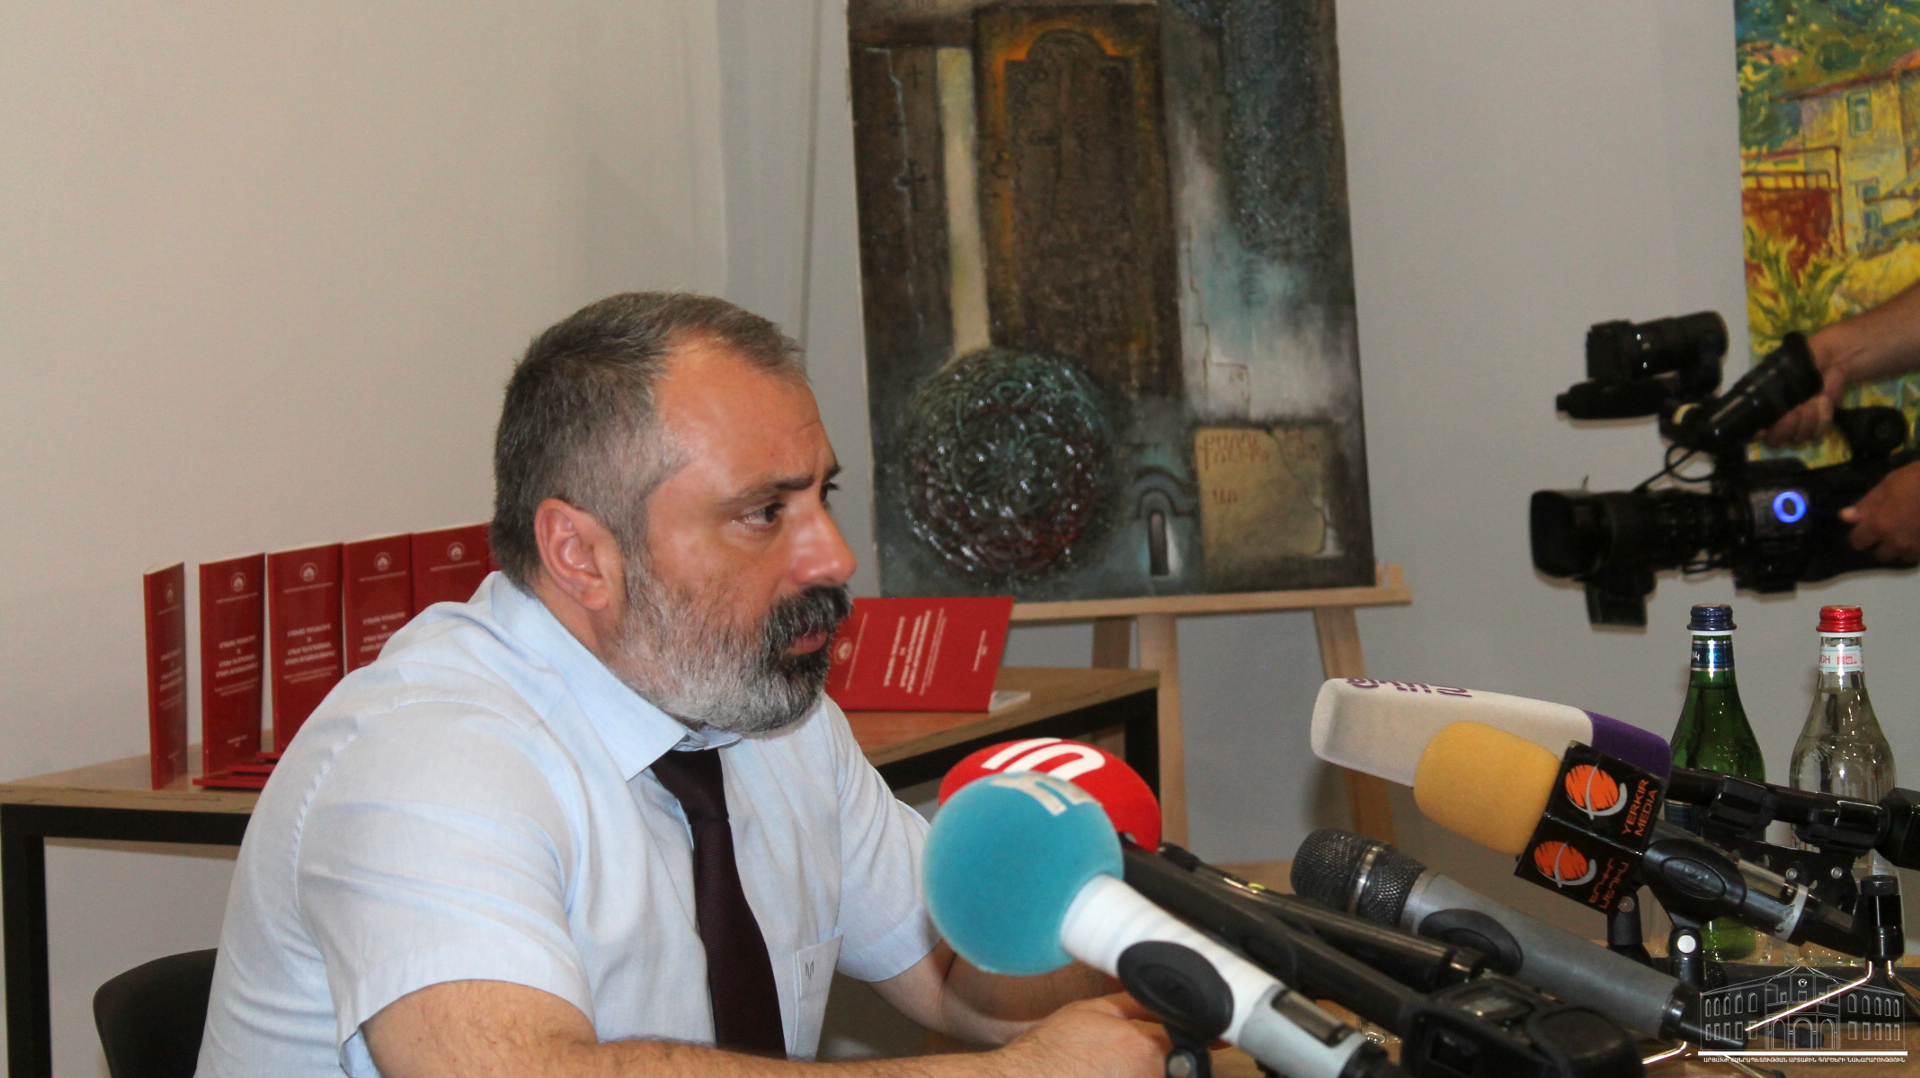 Давид Бабаян: Связывающая Армению и Арцах альтернативная дорога будет инспектирована